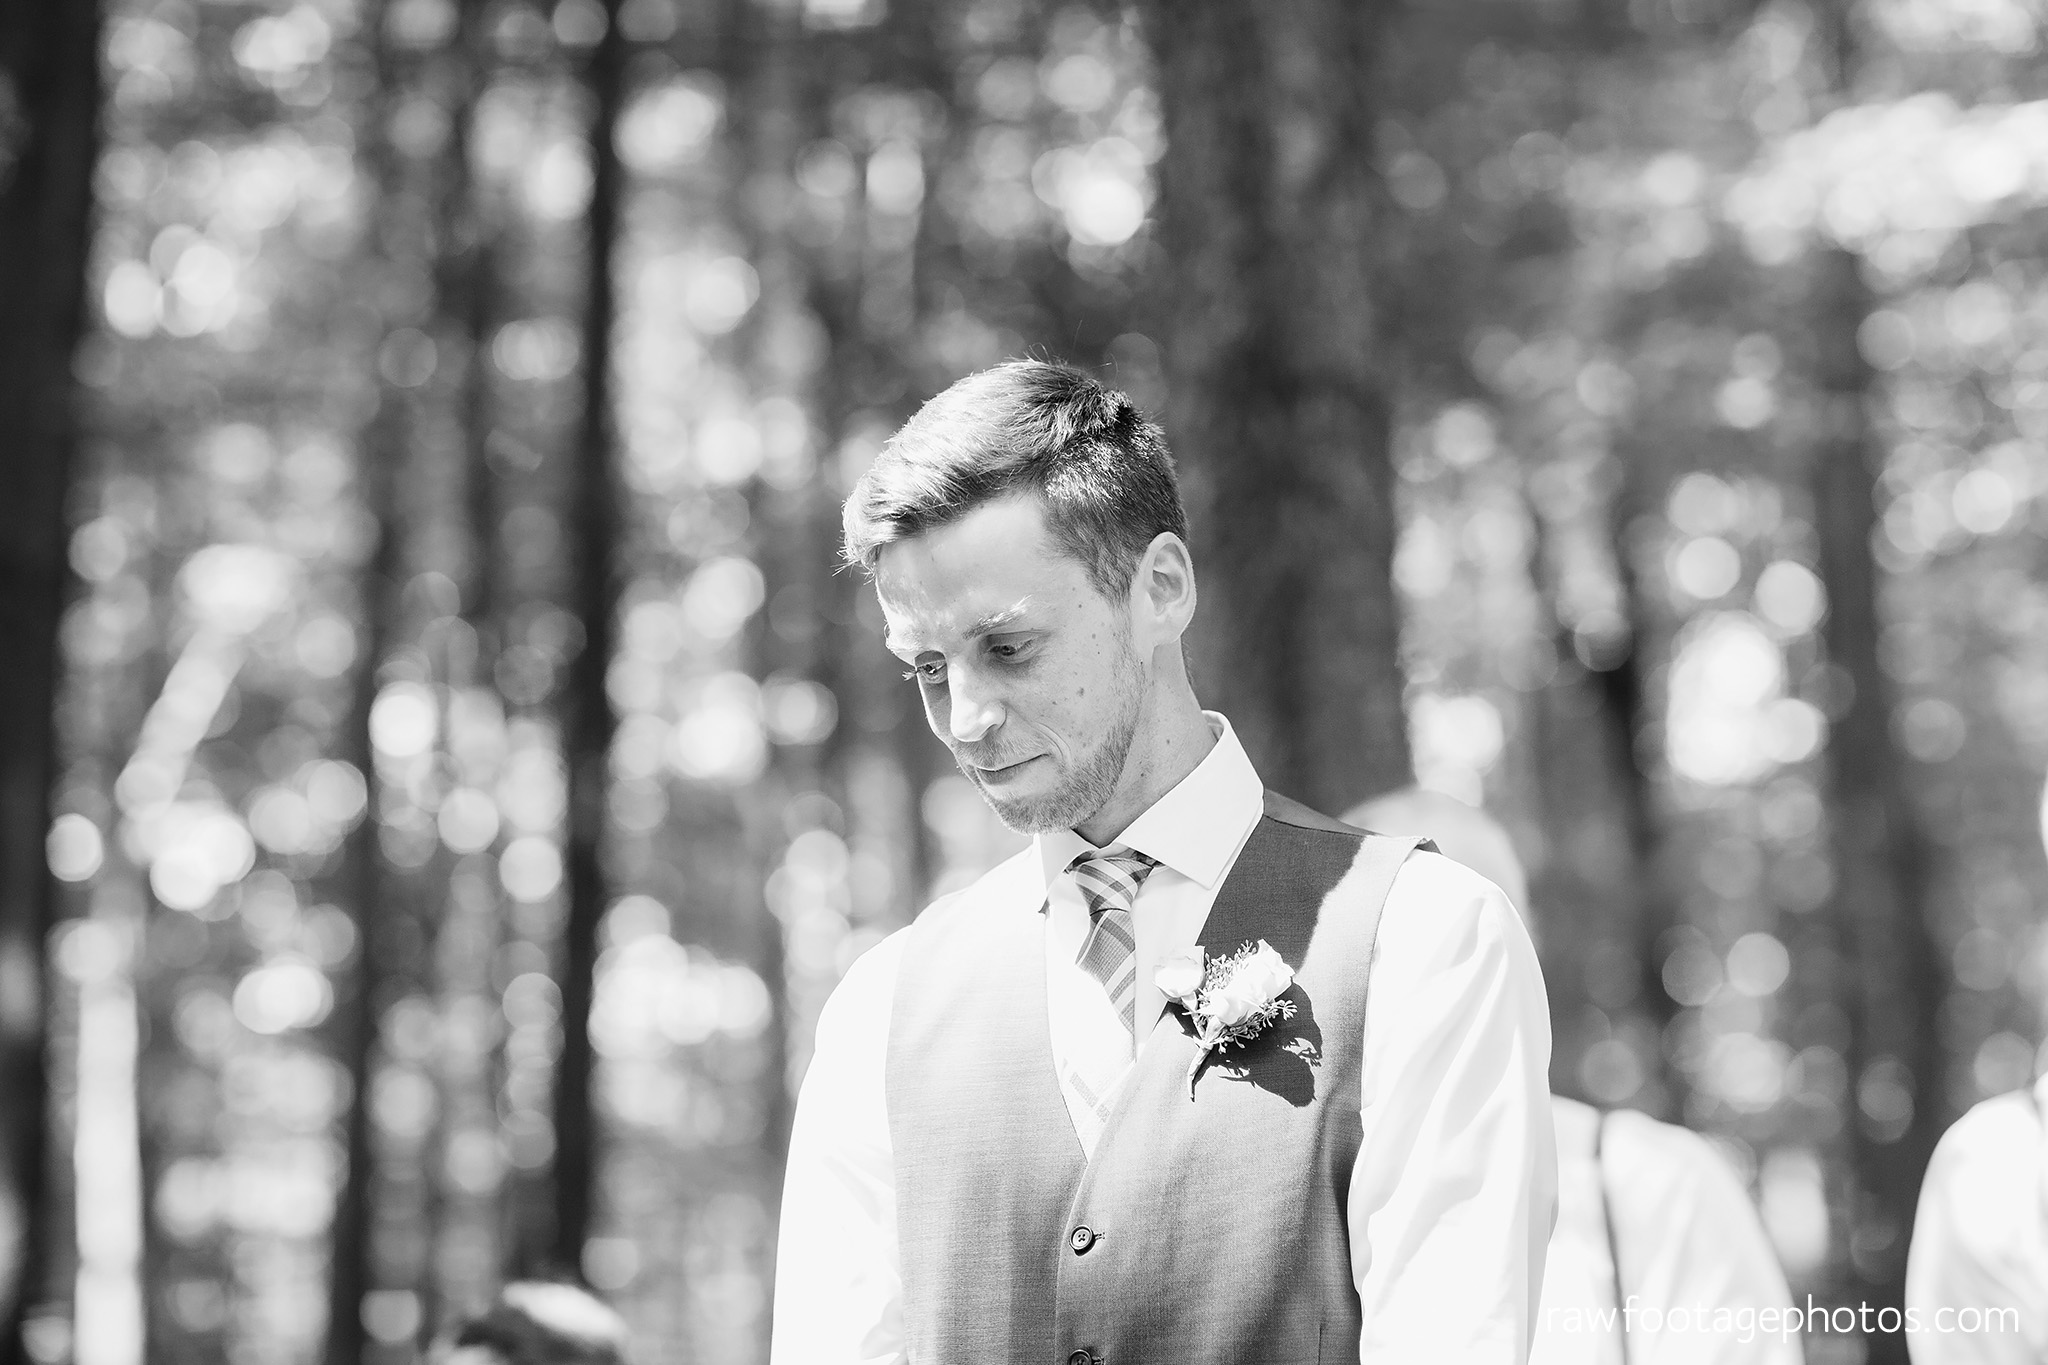 London_Ontario_Wedding_Photographer-Raw_Footage_photography-Forest_wedding-Woodsy_wedding-DIY_Wedding-Candid_Wedding_Photography019.jpg